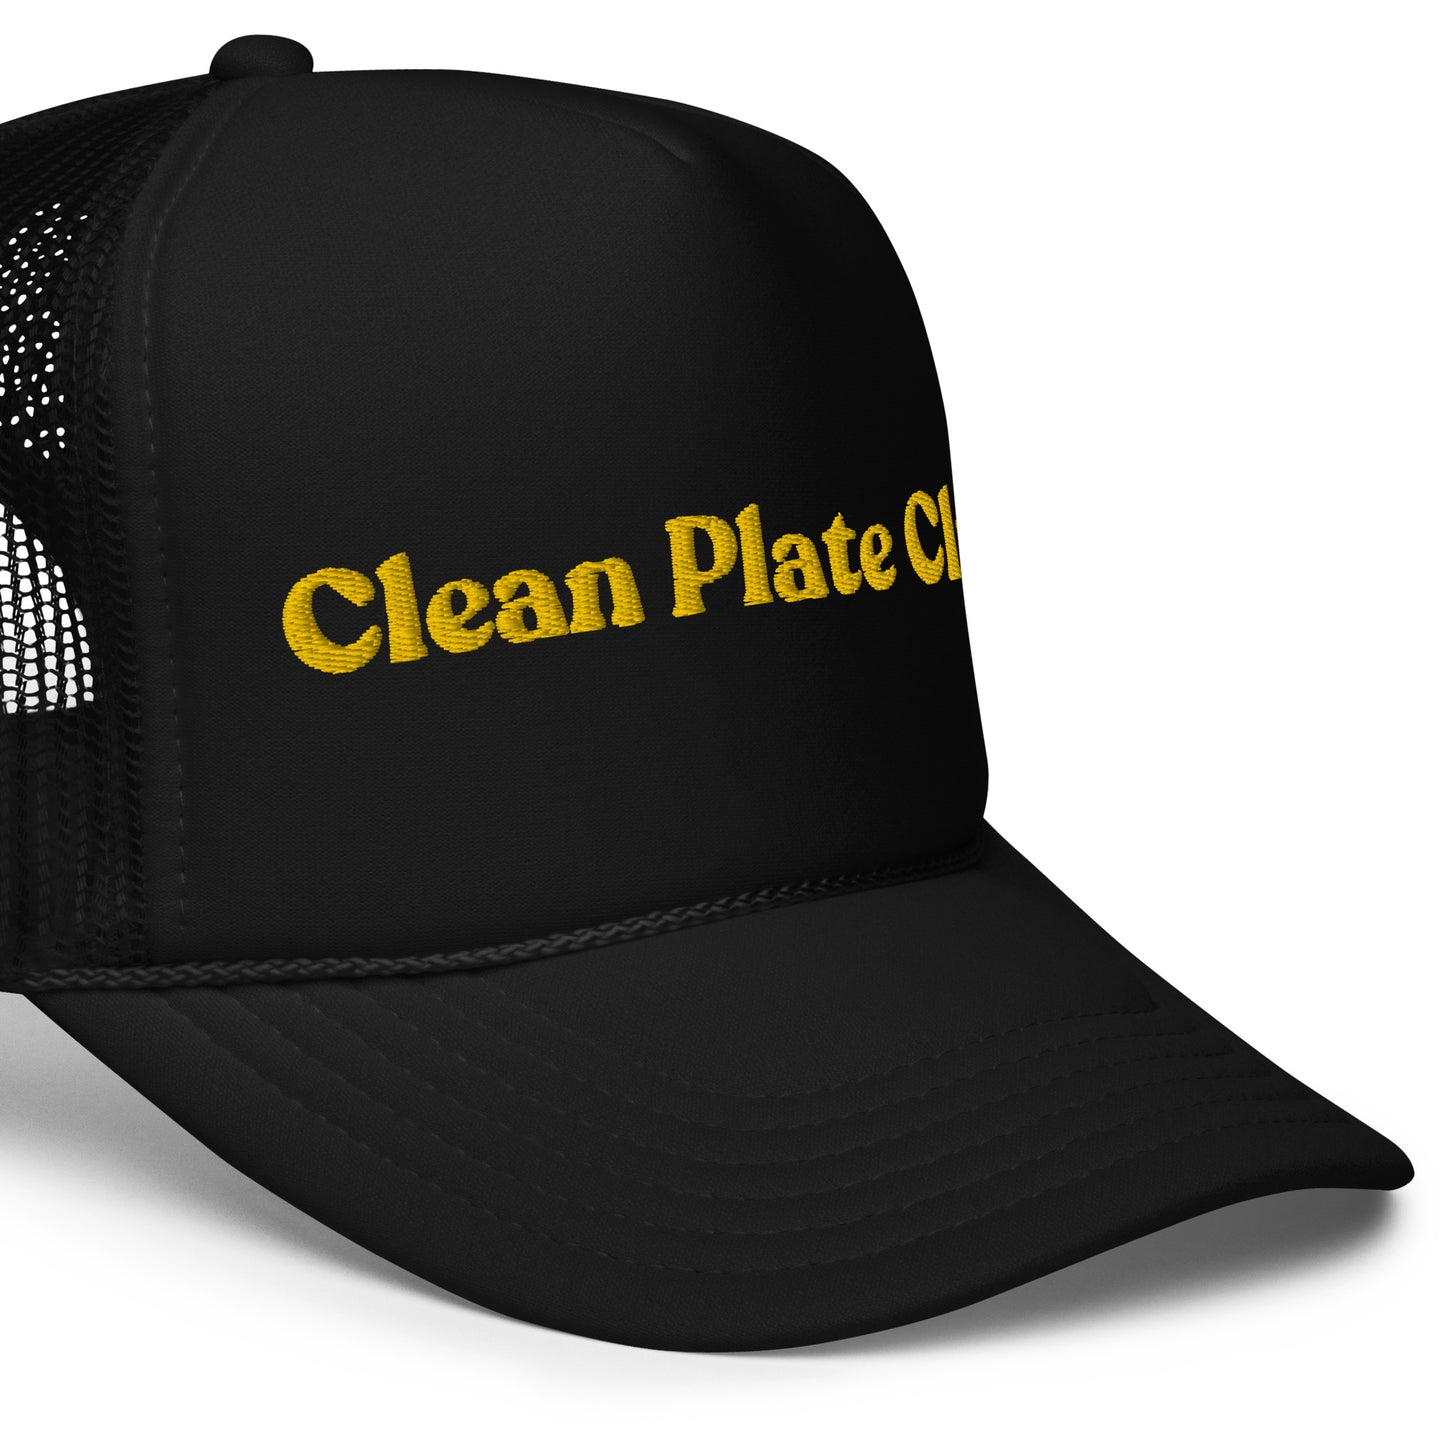 Clean Plate Club Trucker Hat